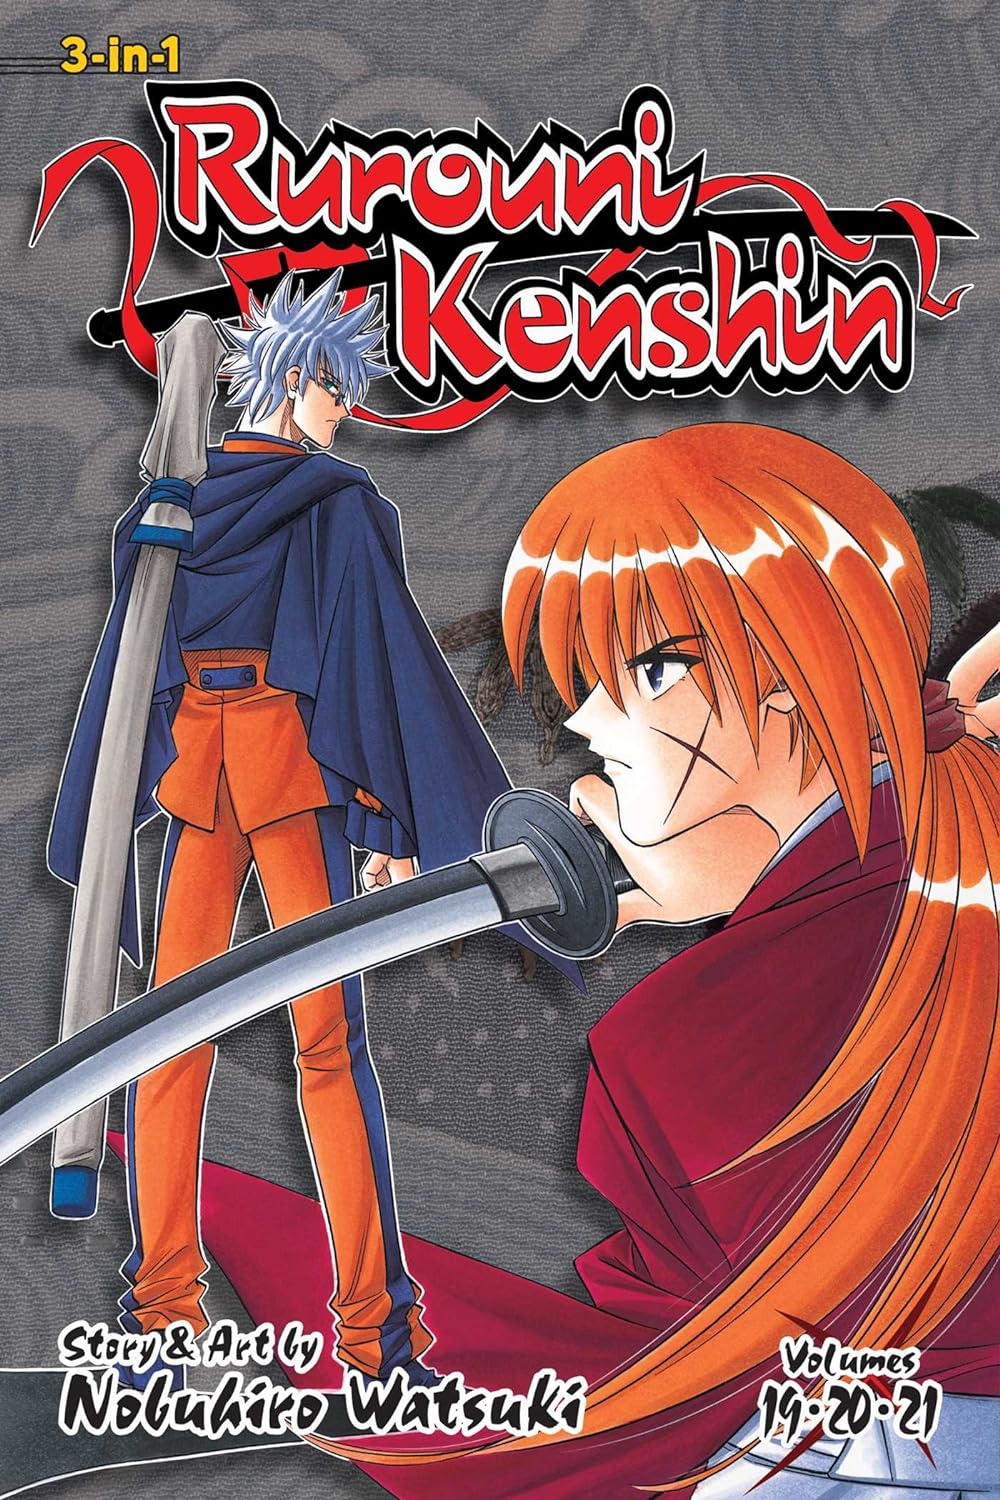 Rurouni Kenshin Volume 19-21 (3-in-1 Edition)